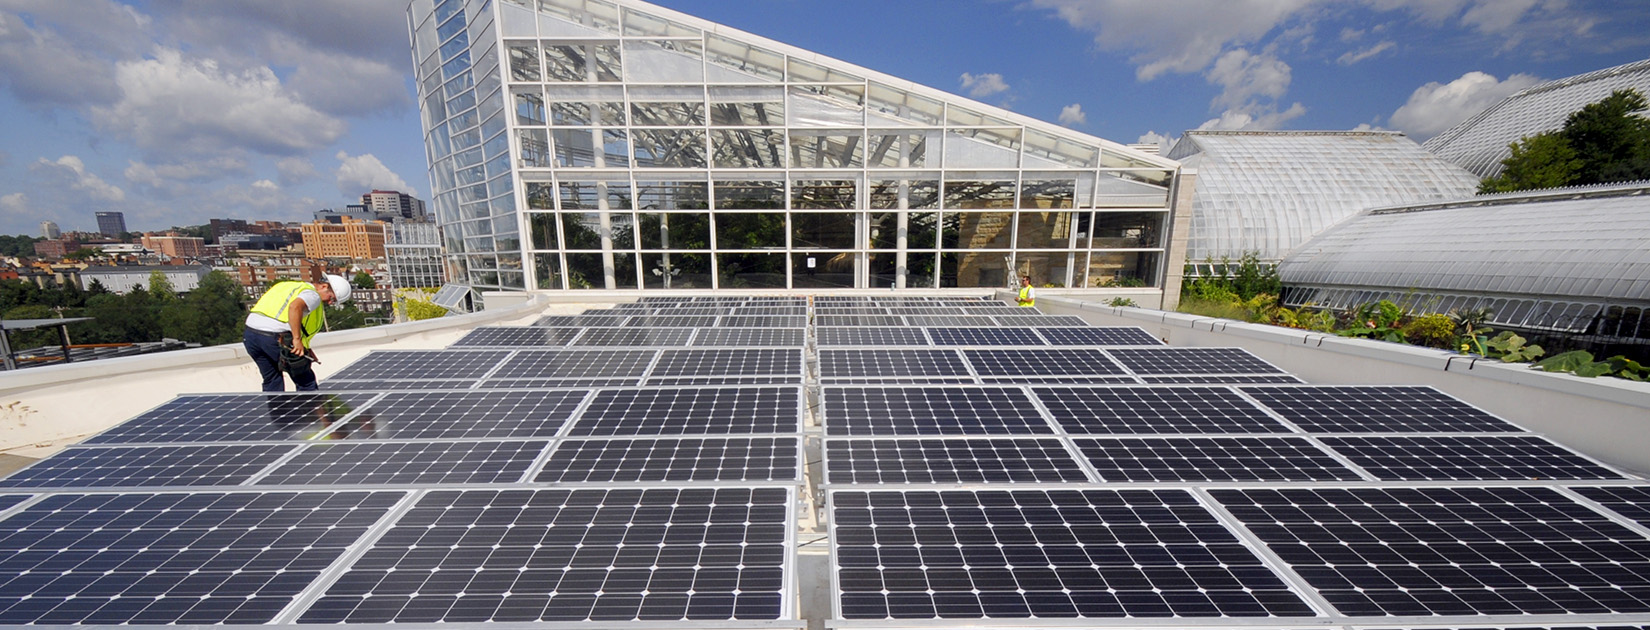 non profit solar panels pittsburgh